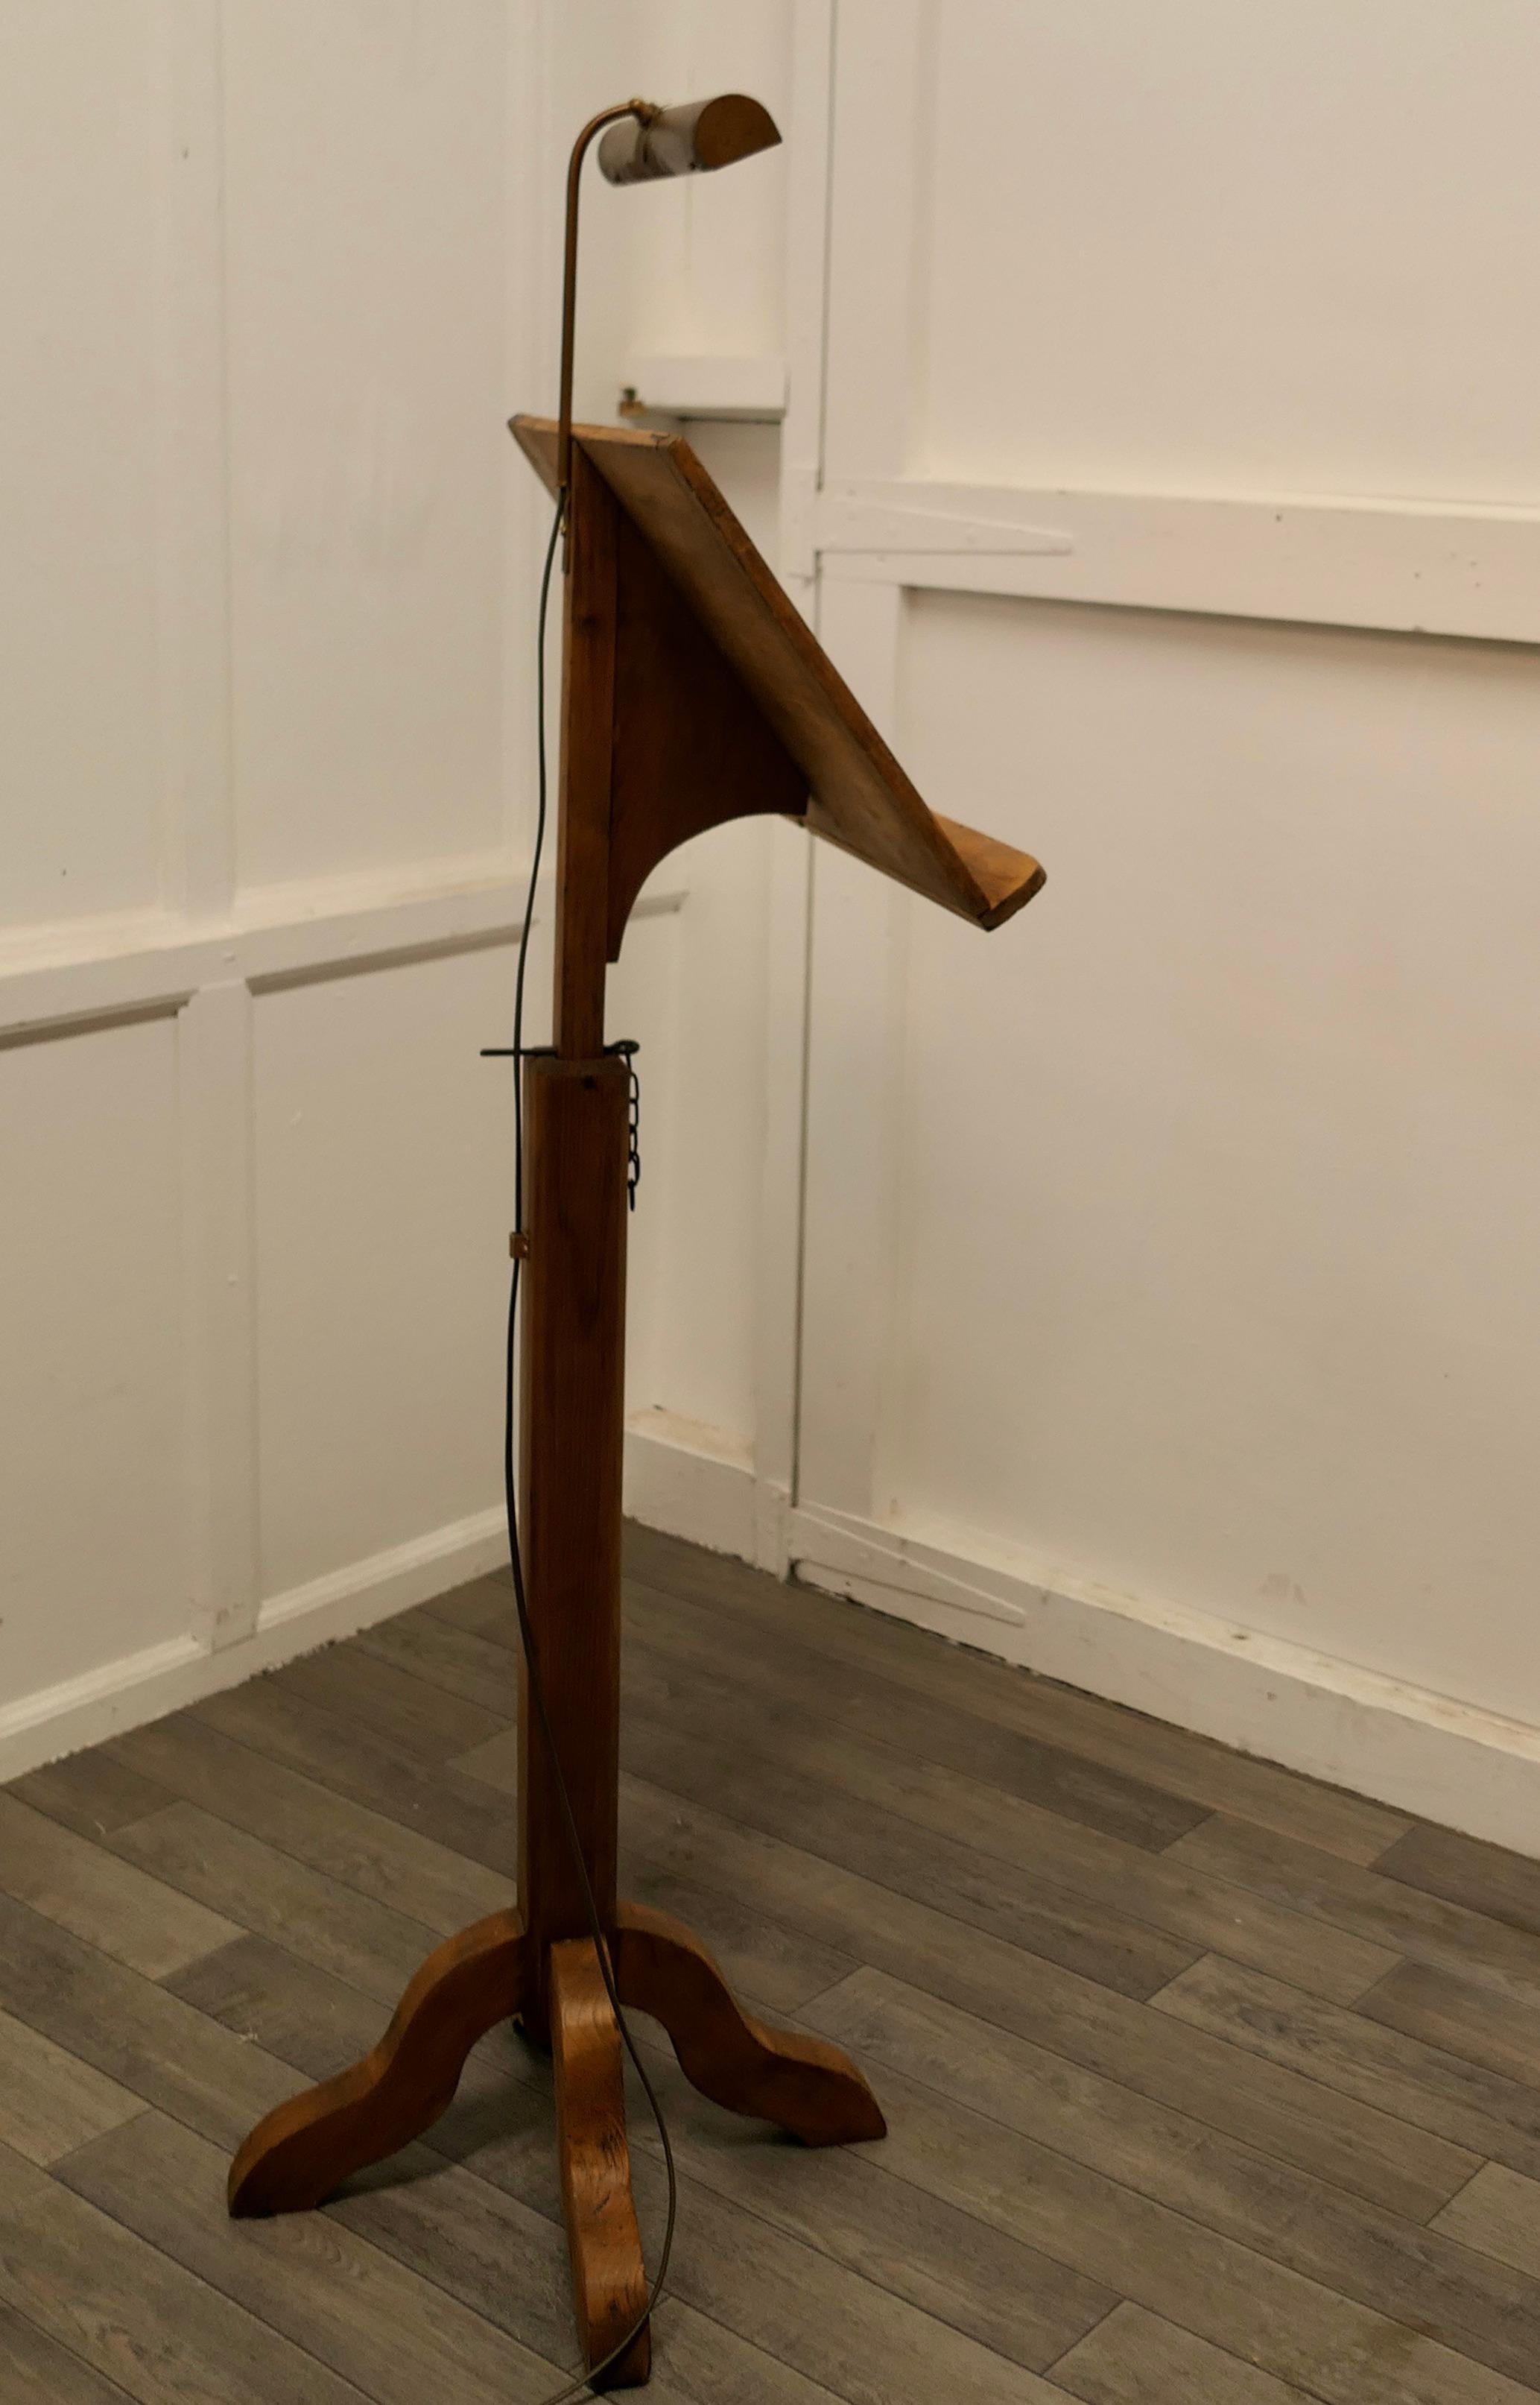 19th Century Arts & Crafts Menu Podium, Maître d' Stand with Reading Lamp